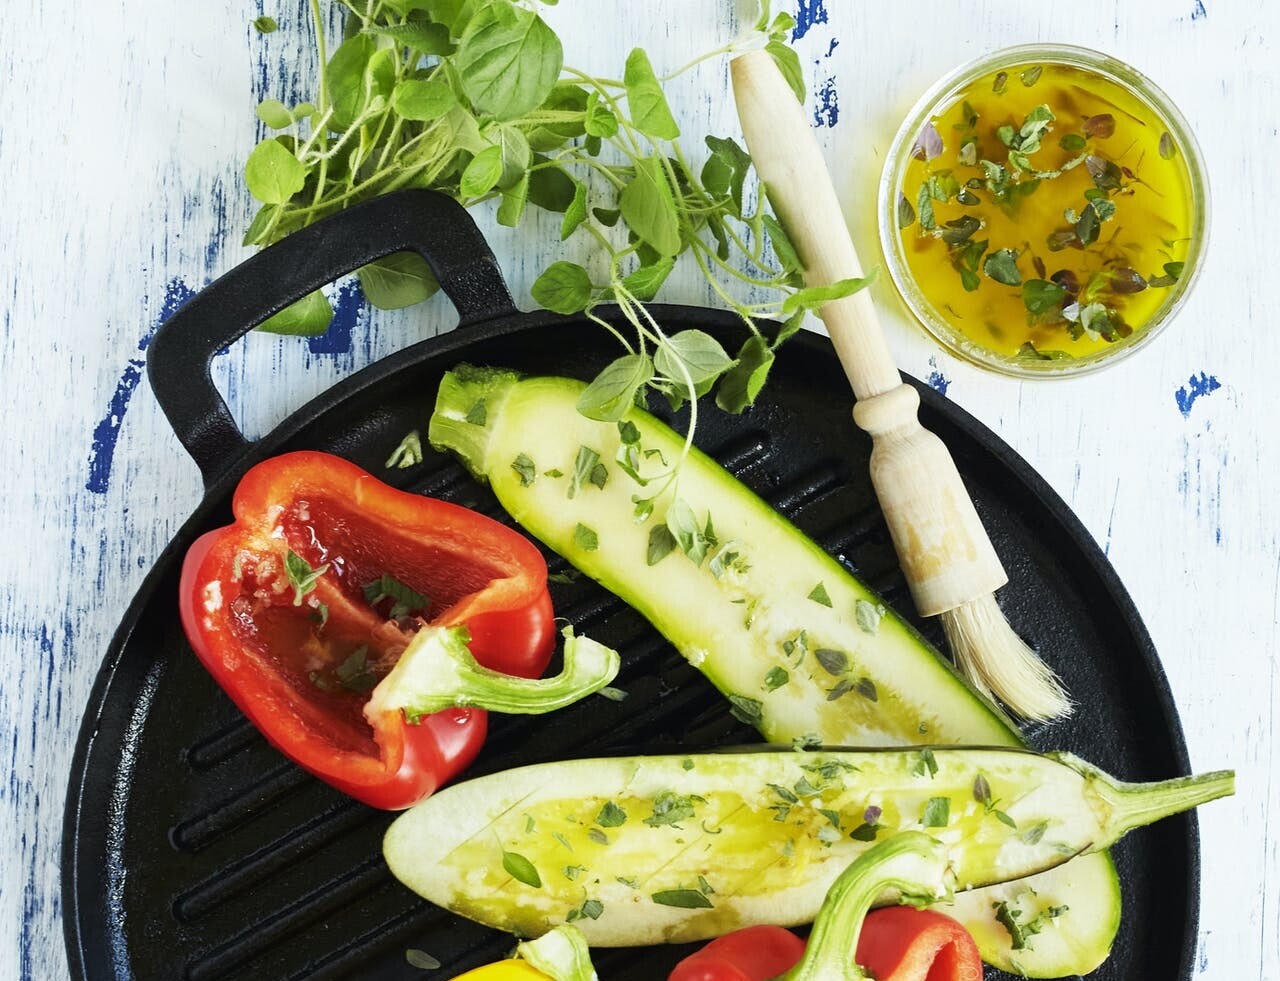 Grillmarinade til grøntsager